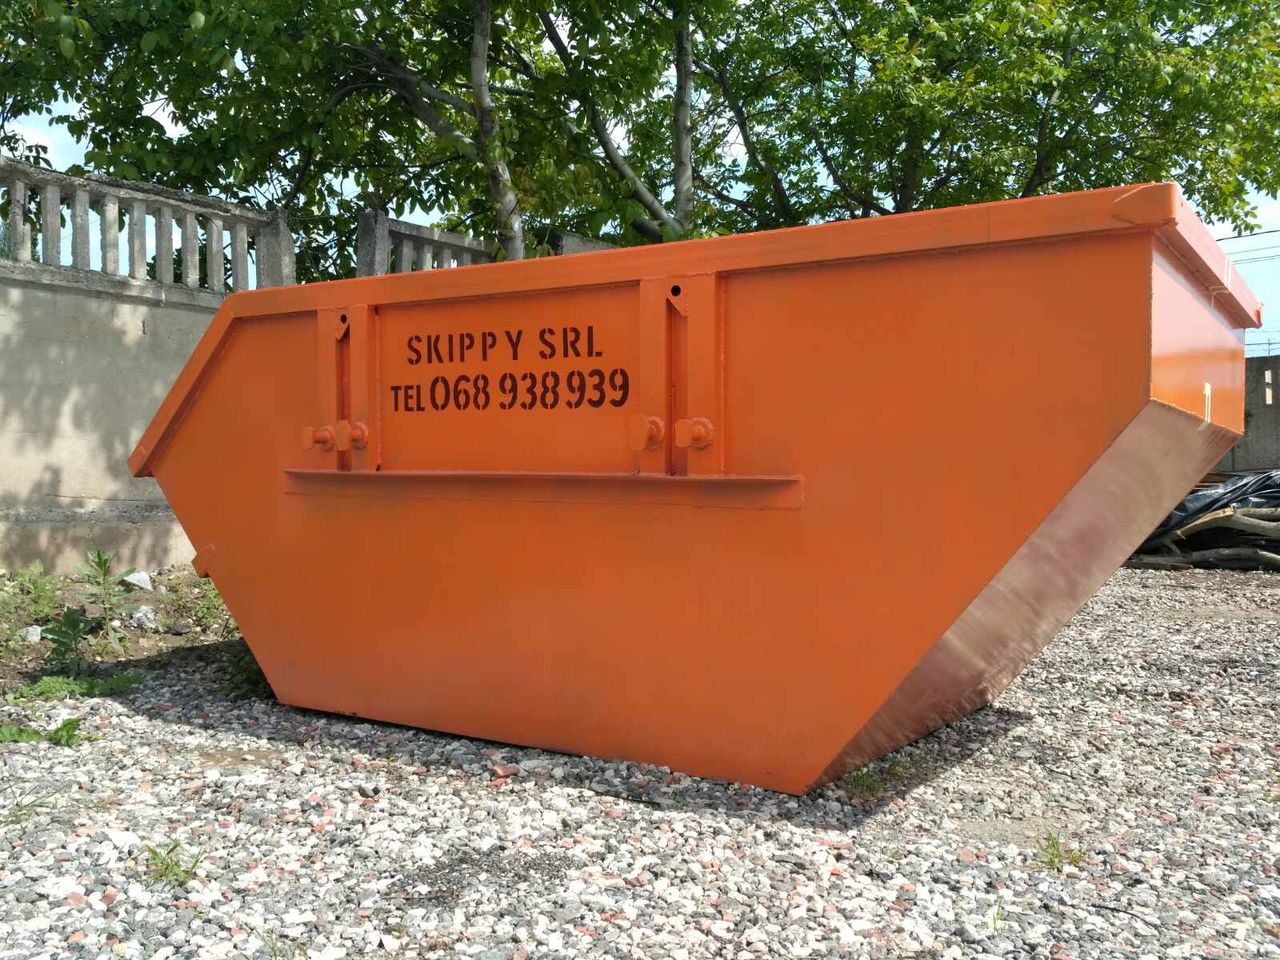 Gunoi container мусор отходы бункер строймусор deseuri "Skippy" SRL foto 1